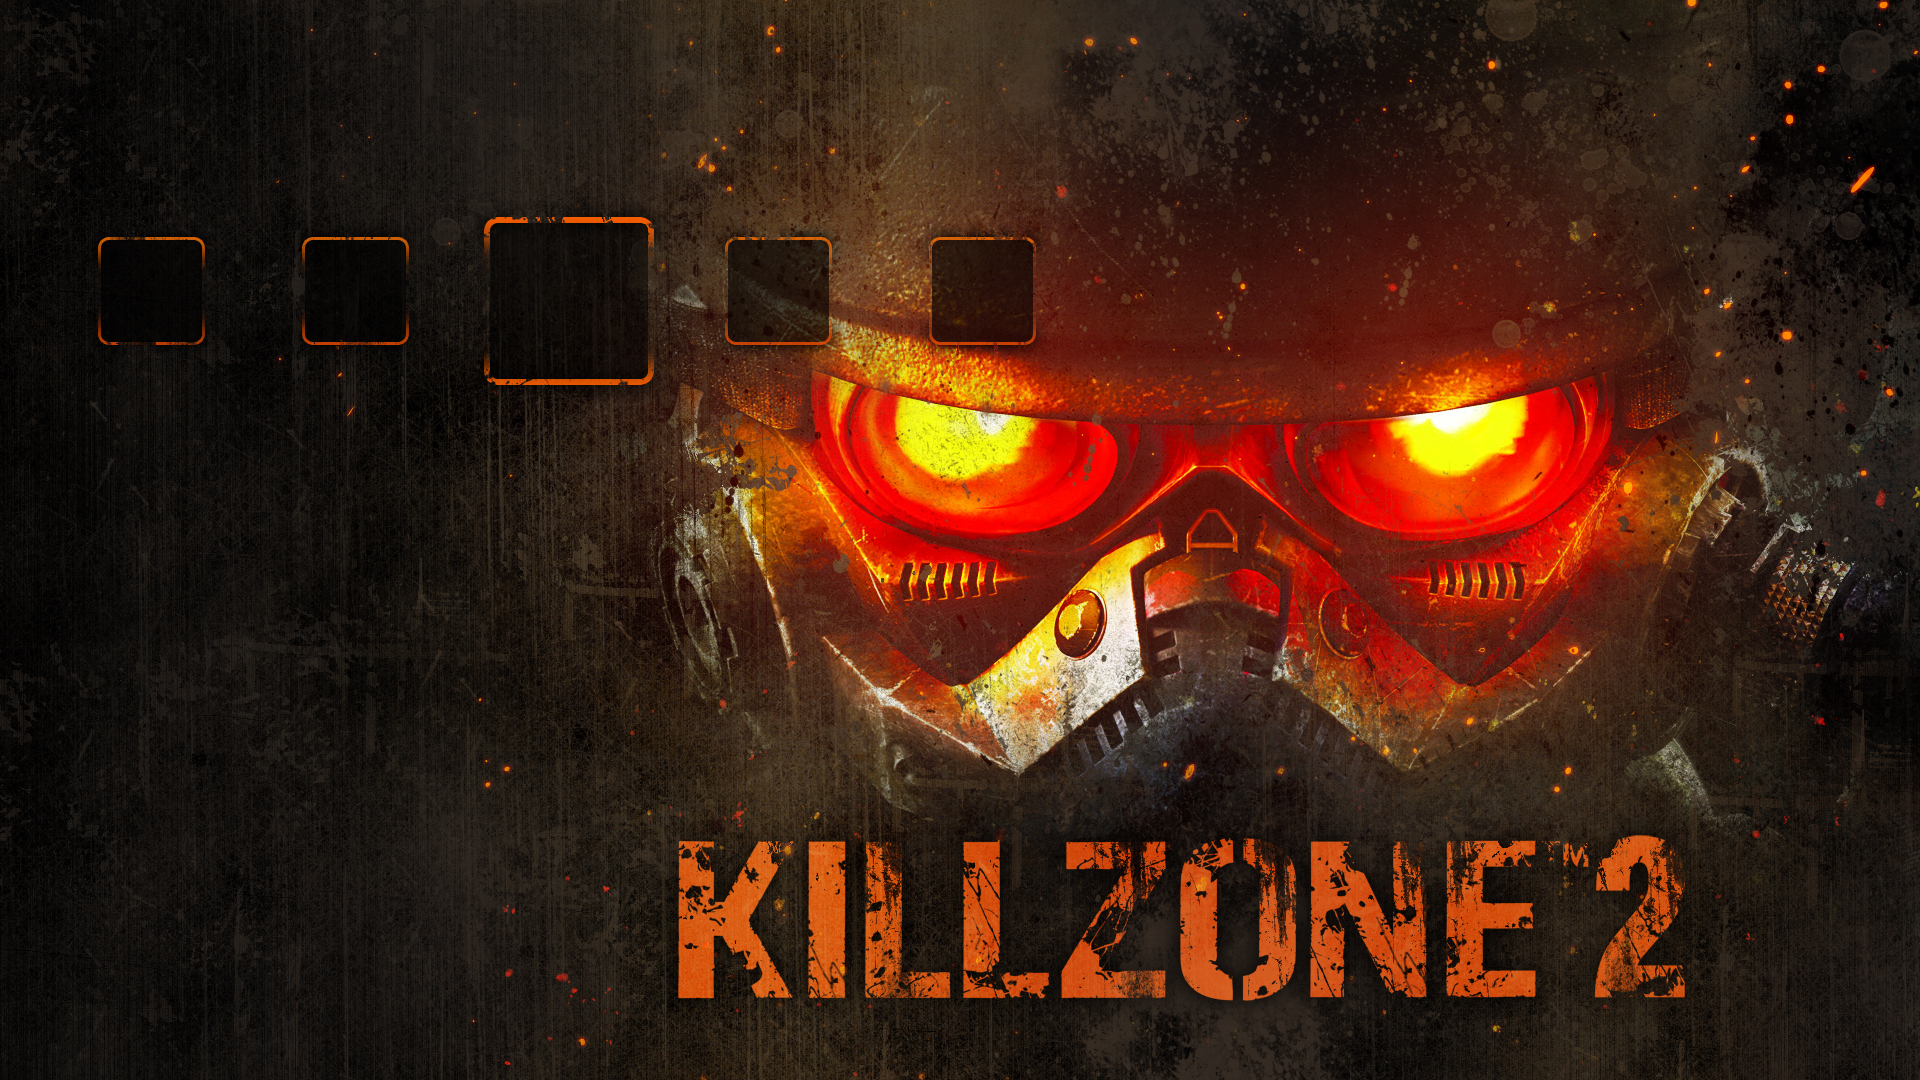 Killzone 2 - desktop wallpaper